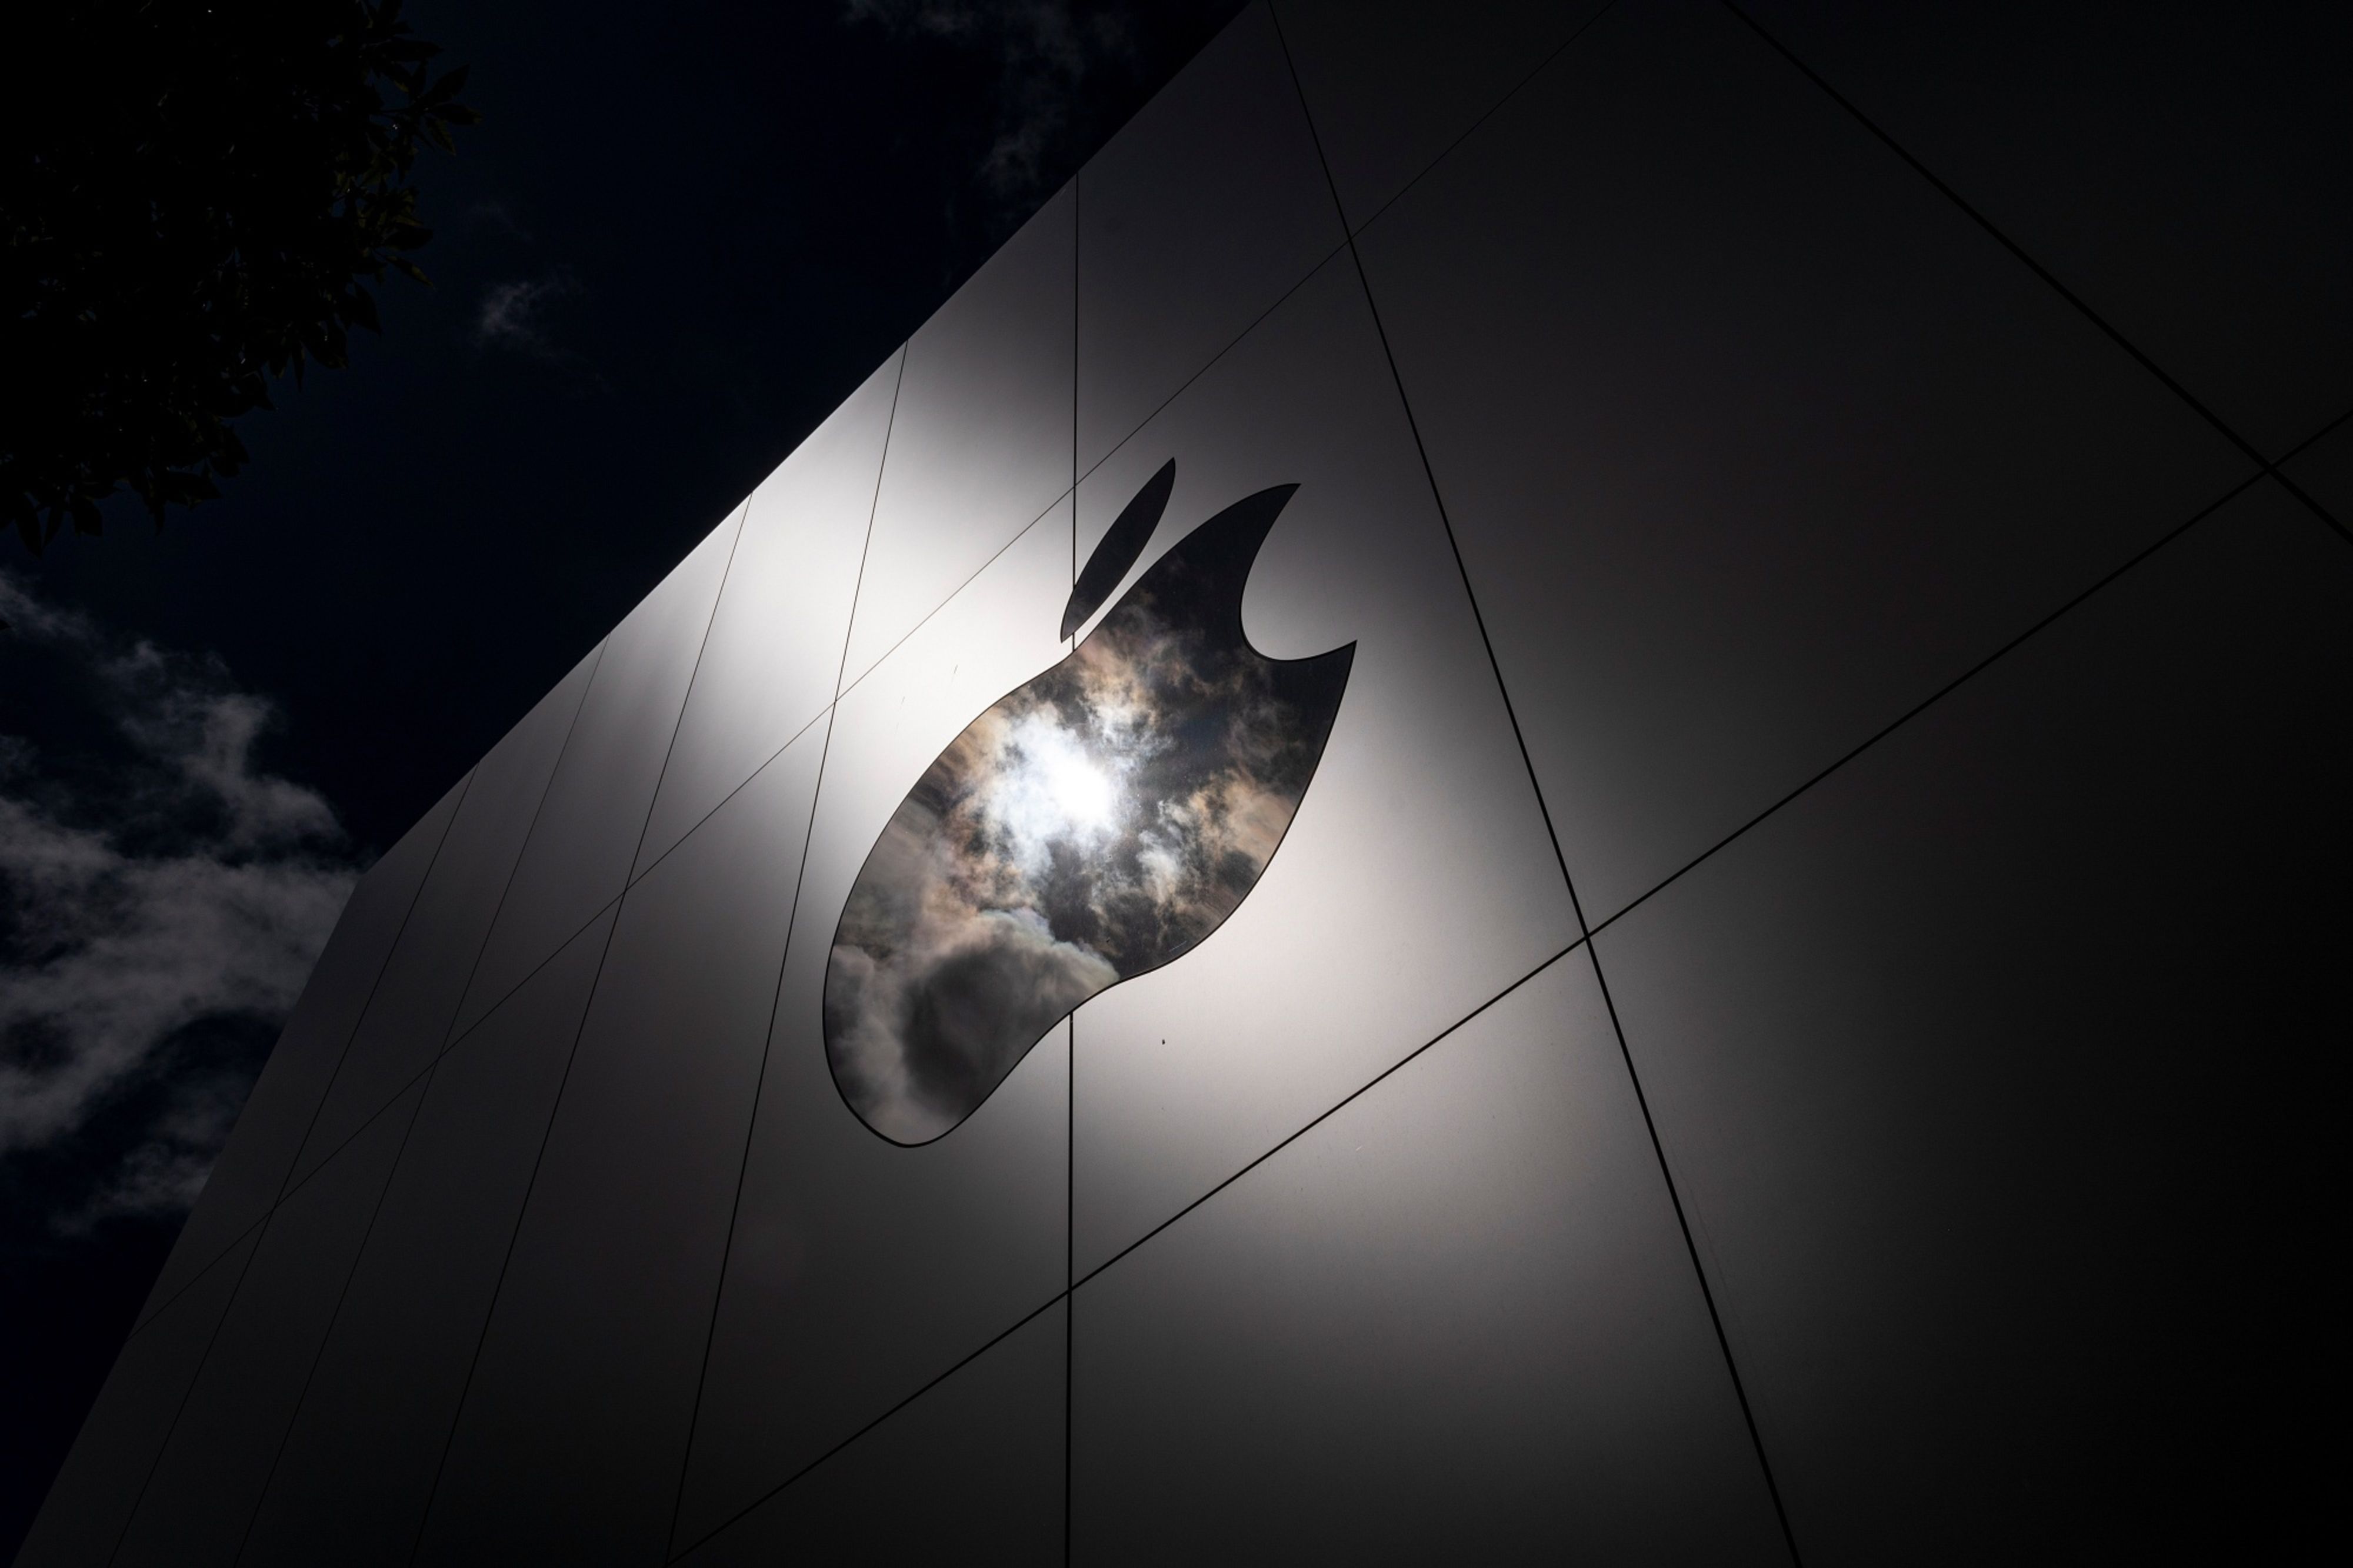 The Apple logo on a store in San Francisco, California, U.S. (Bloomberg&mdash;© 2021 Bloomberg Finance LP)